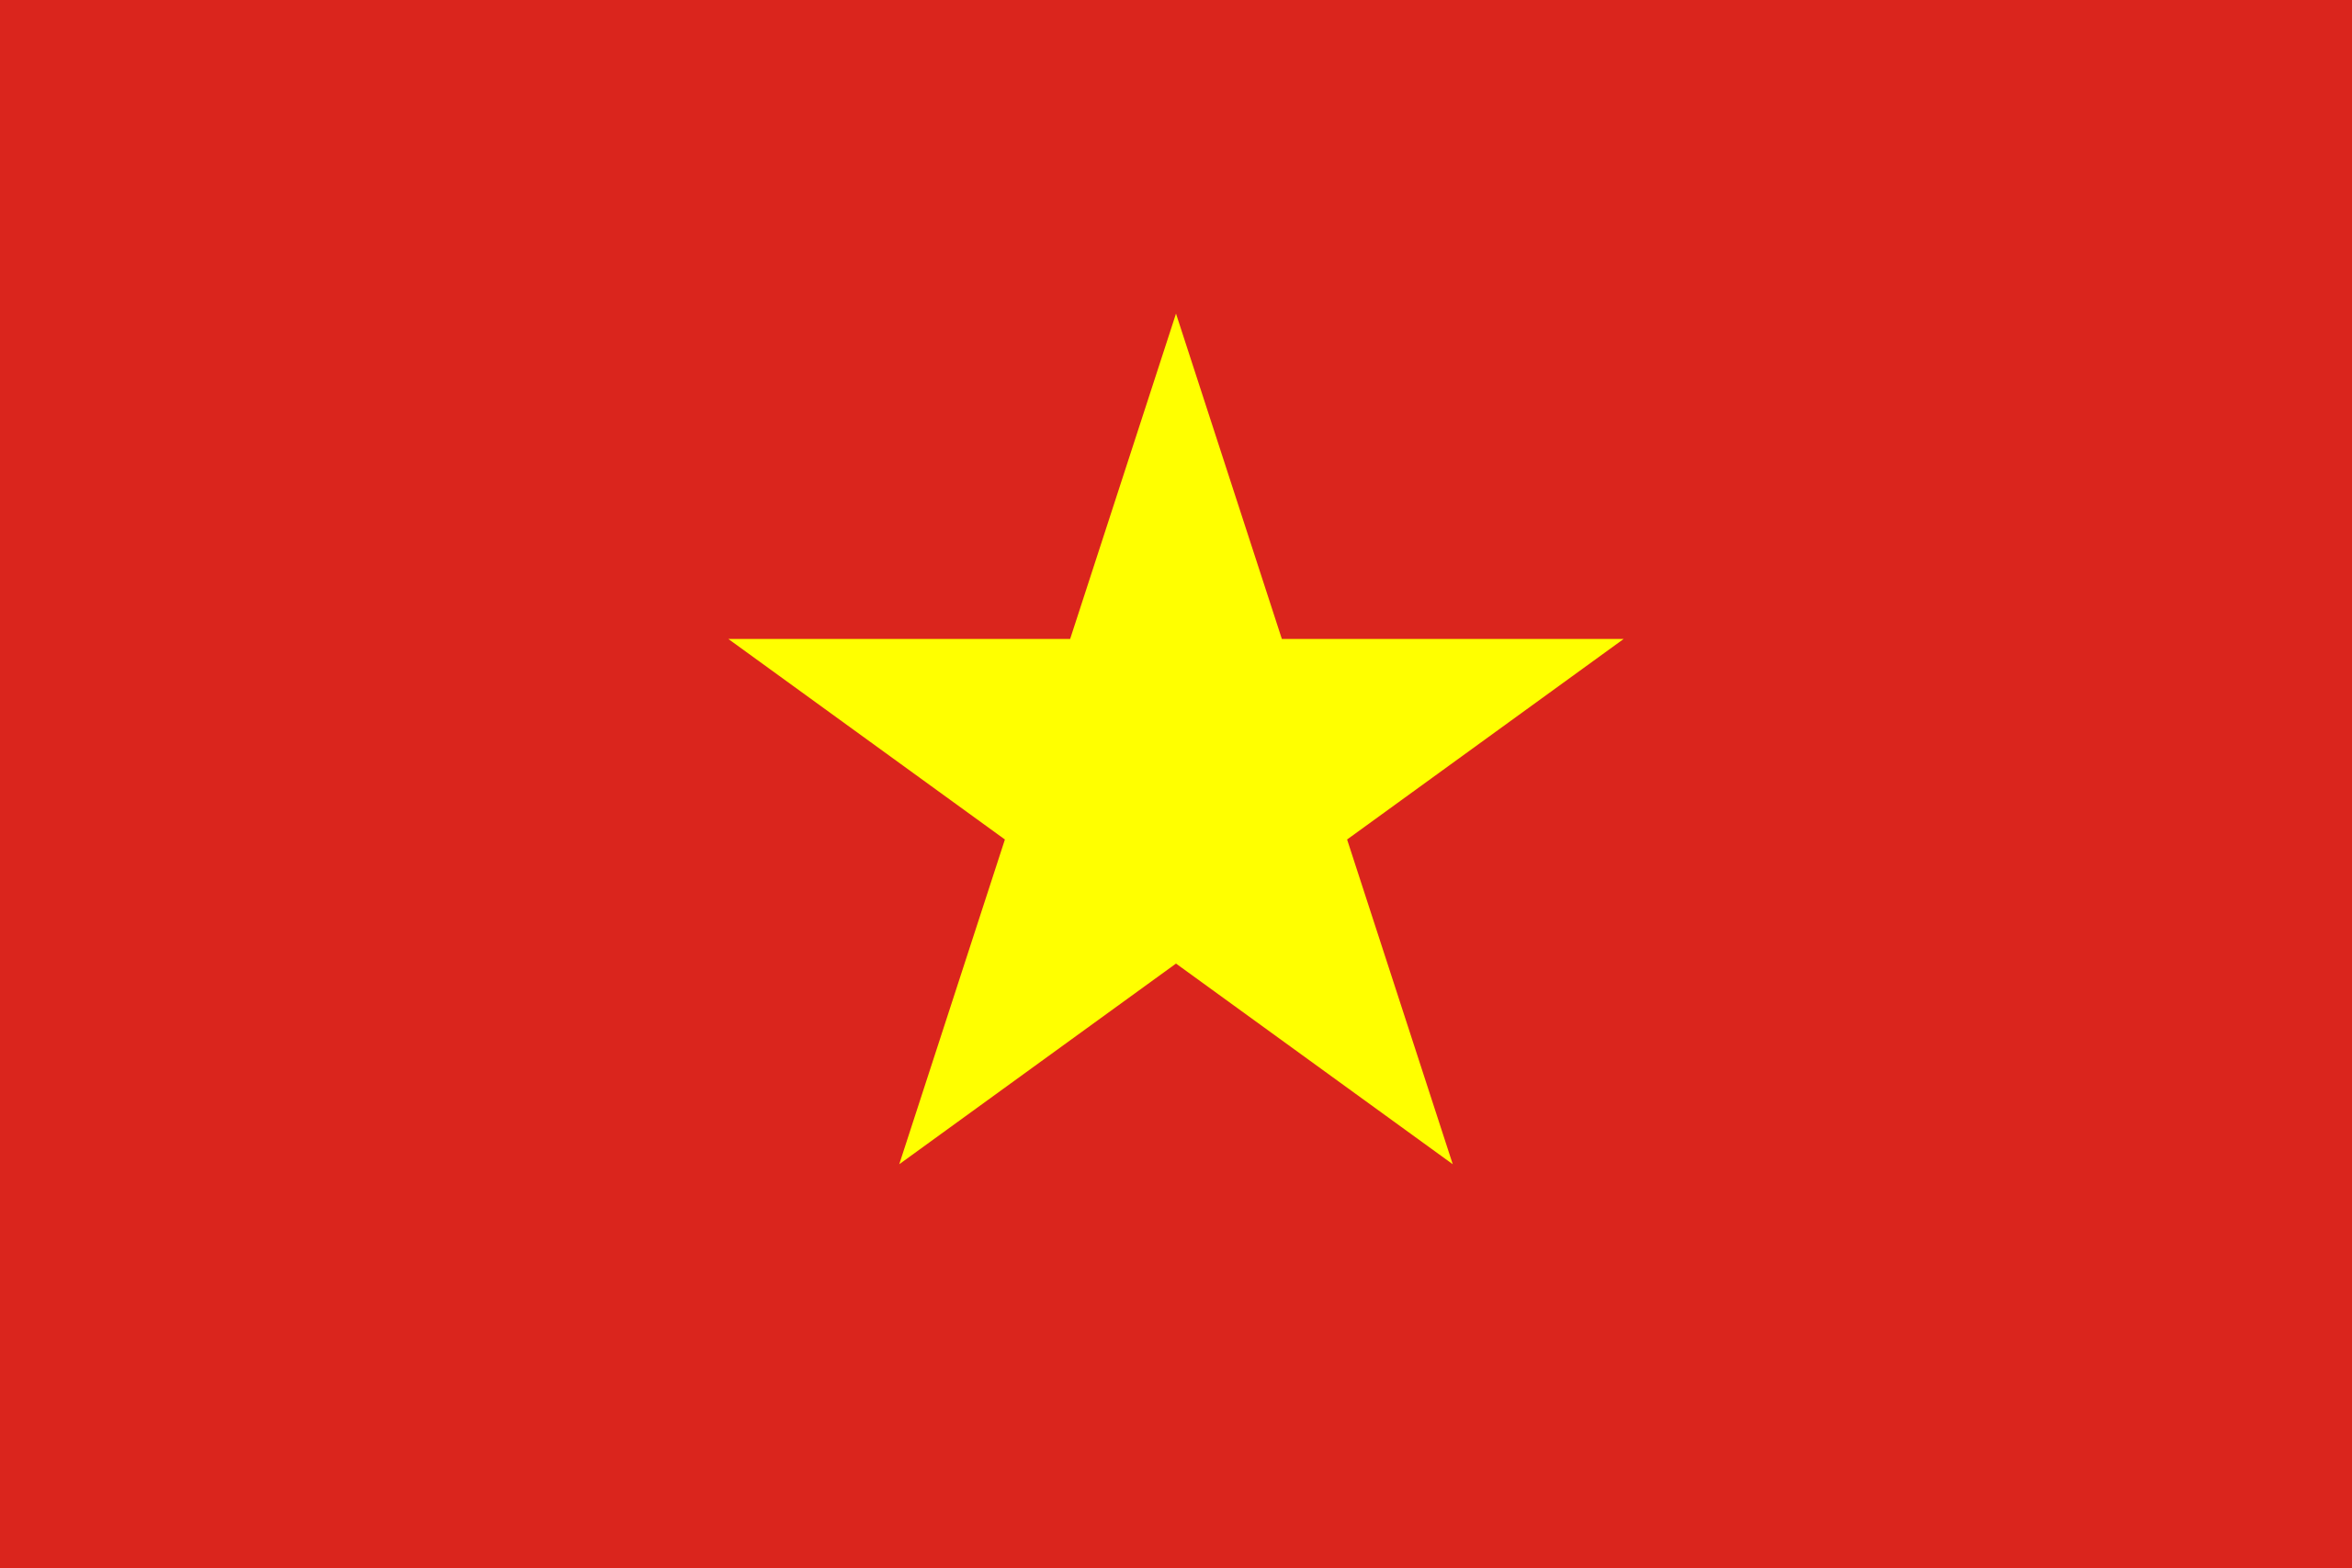 2560px-Flag_of_Vietnam.svg